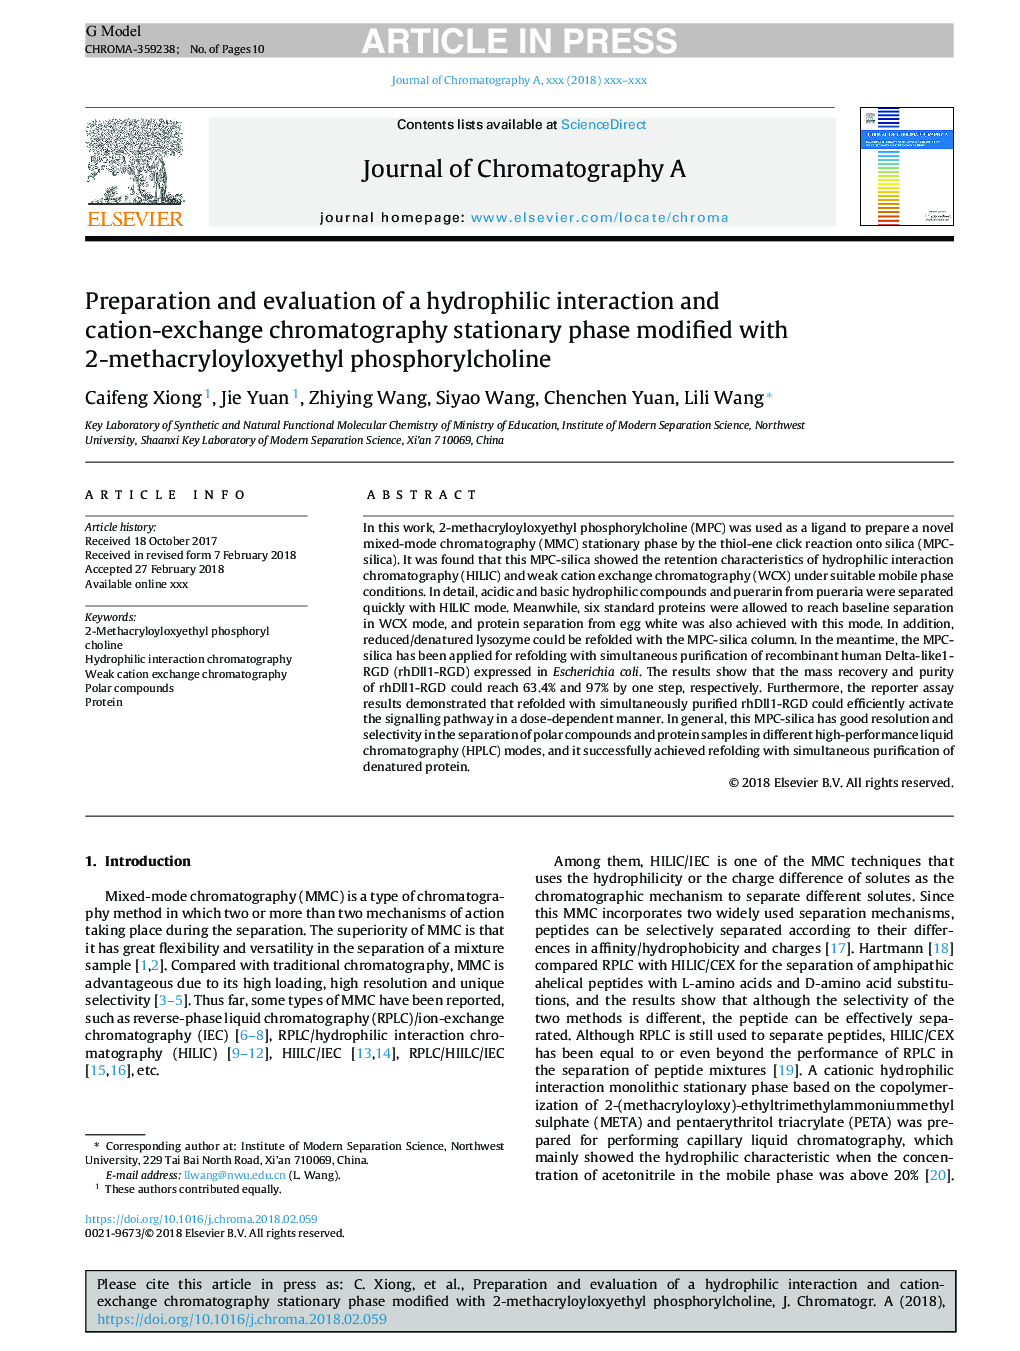 Preparation and evaluation of a hydrophilic interaction and cation-exchange chromatography stationary phase modified with 2-methacryloyloxyethyl phosphorylcholine